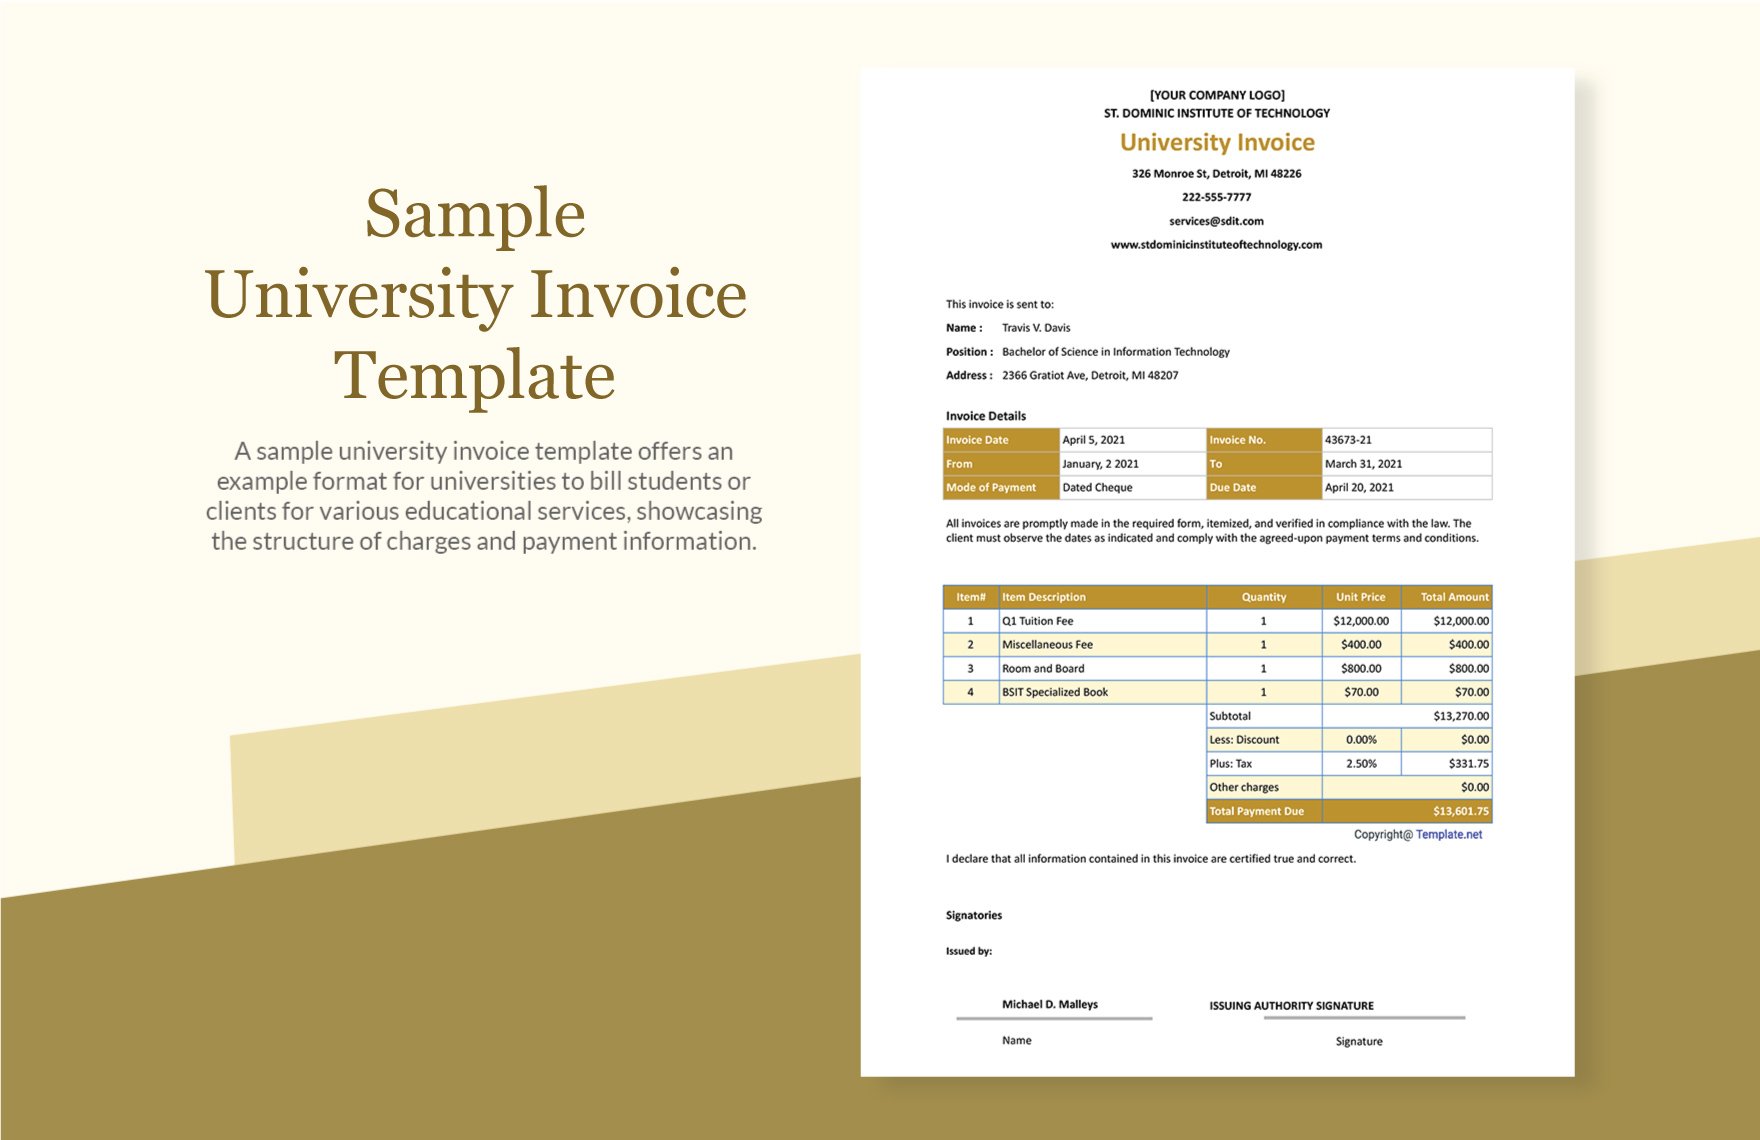 Sample University Invoice Template